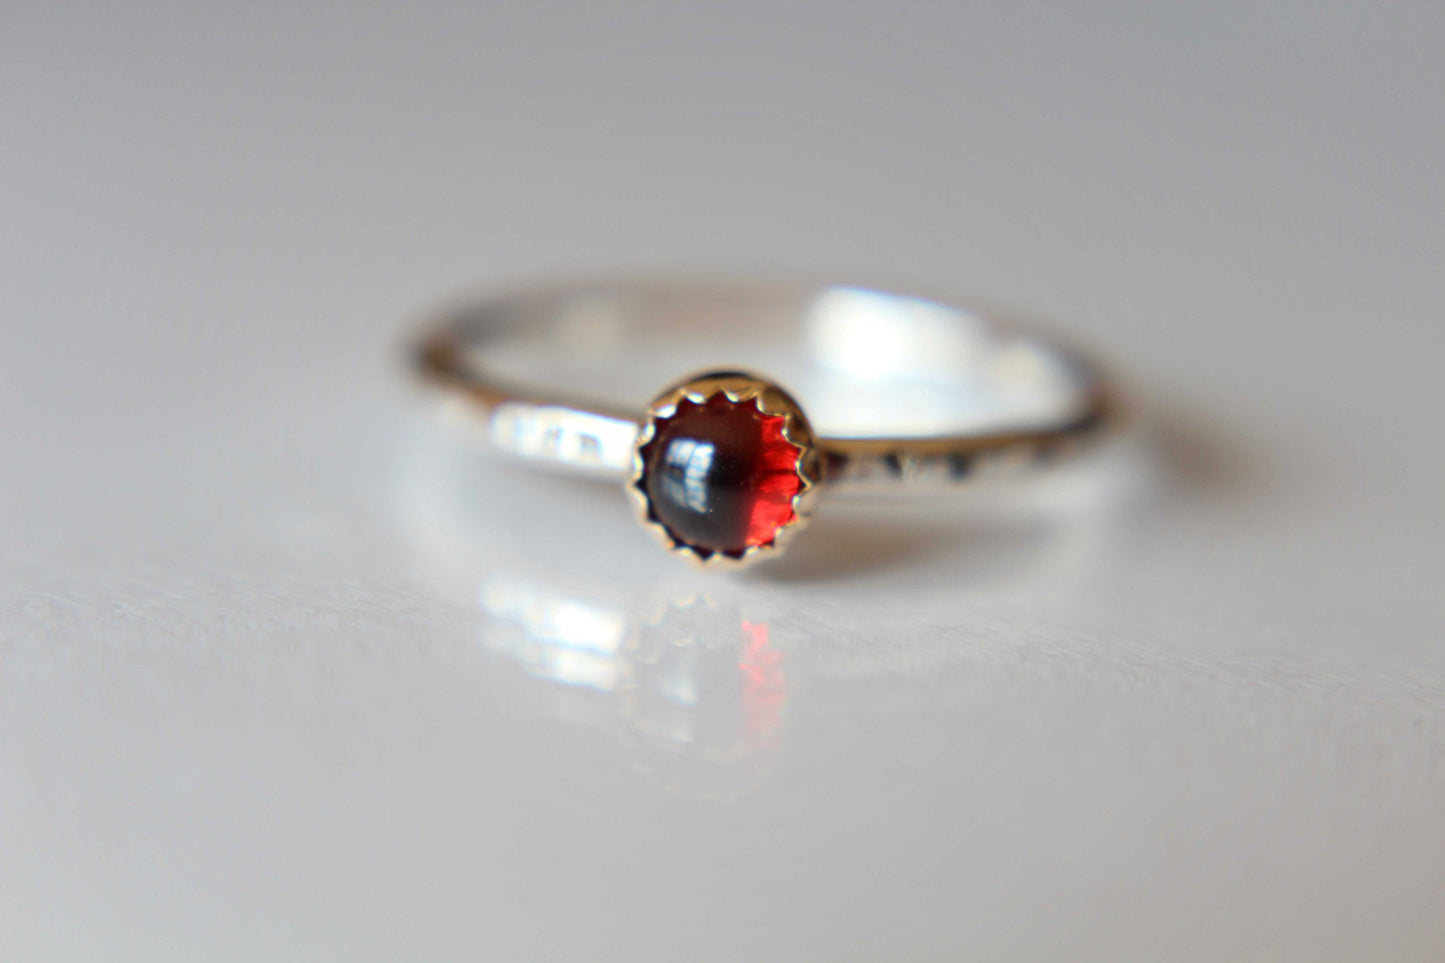 Garnet Ring, Natural Red Garnet Ring, Textured Garnet Ring, Handmade Ring, Thick Ring, Silver and Gold Ring, Gemstone Ring, January, Gift